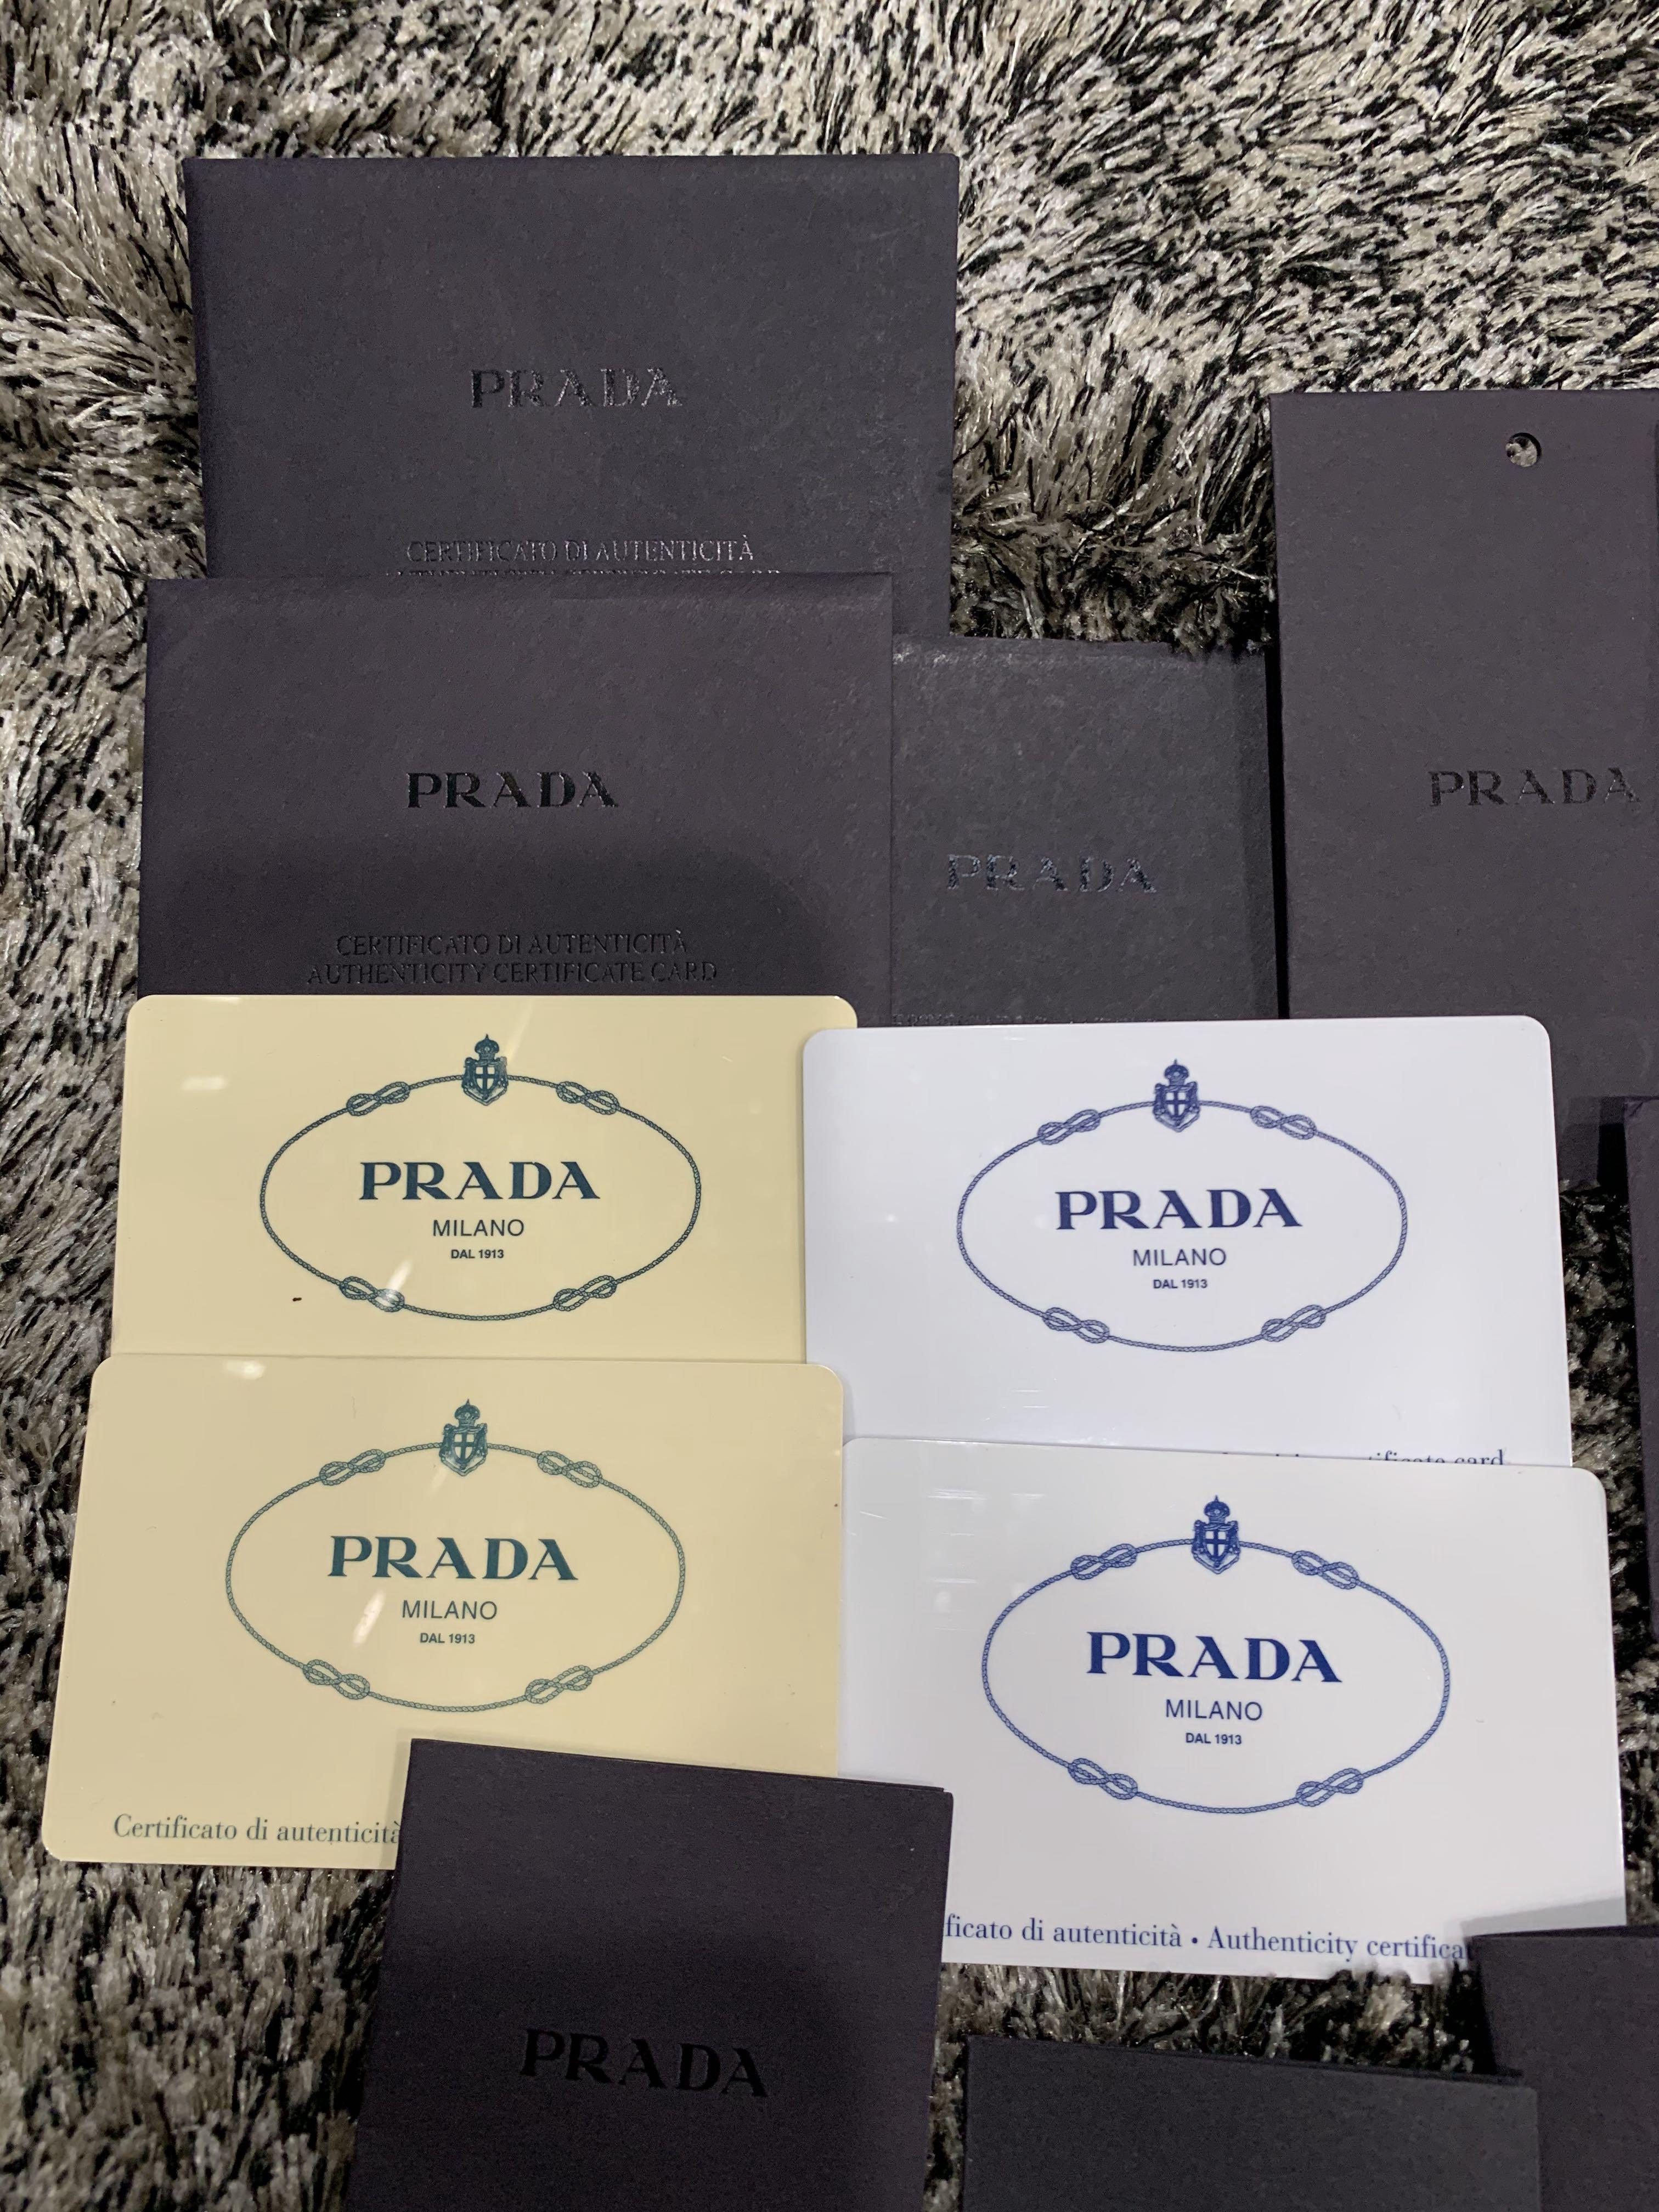 Authentic Prada authenticity card, care cards, receipt envelope